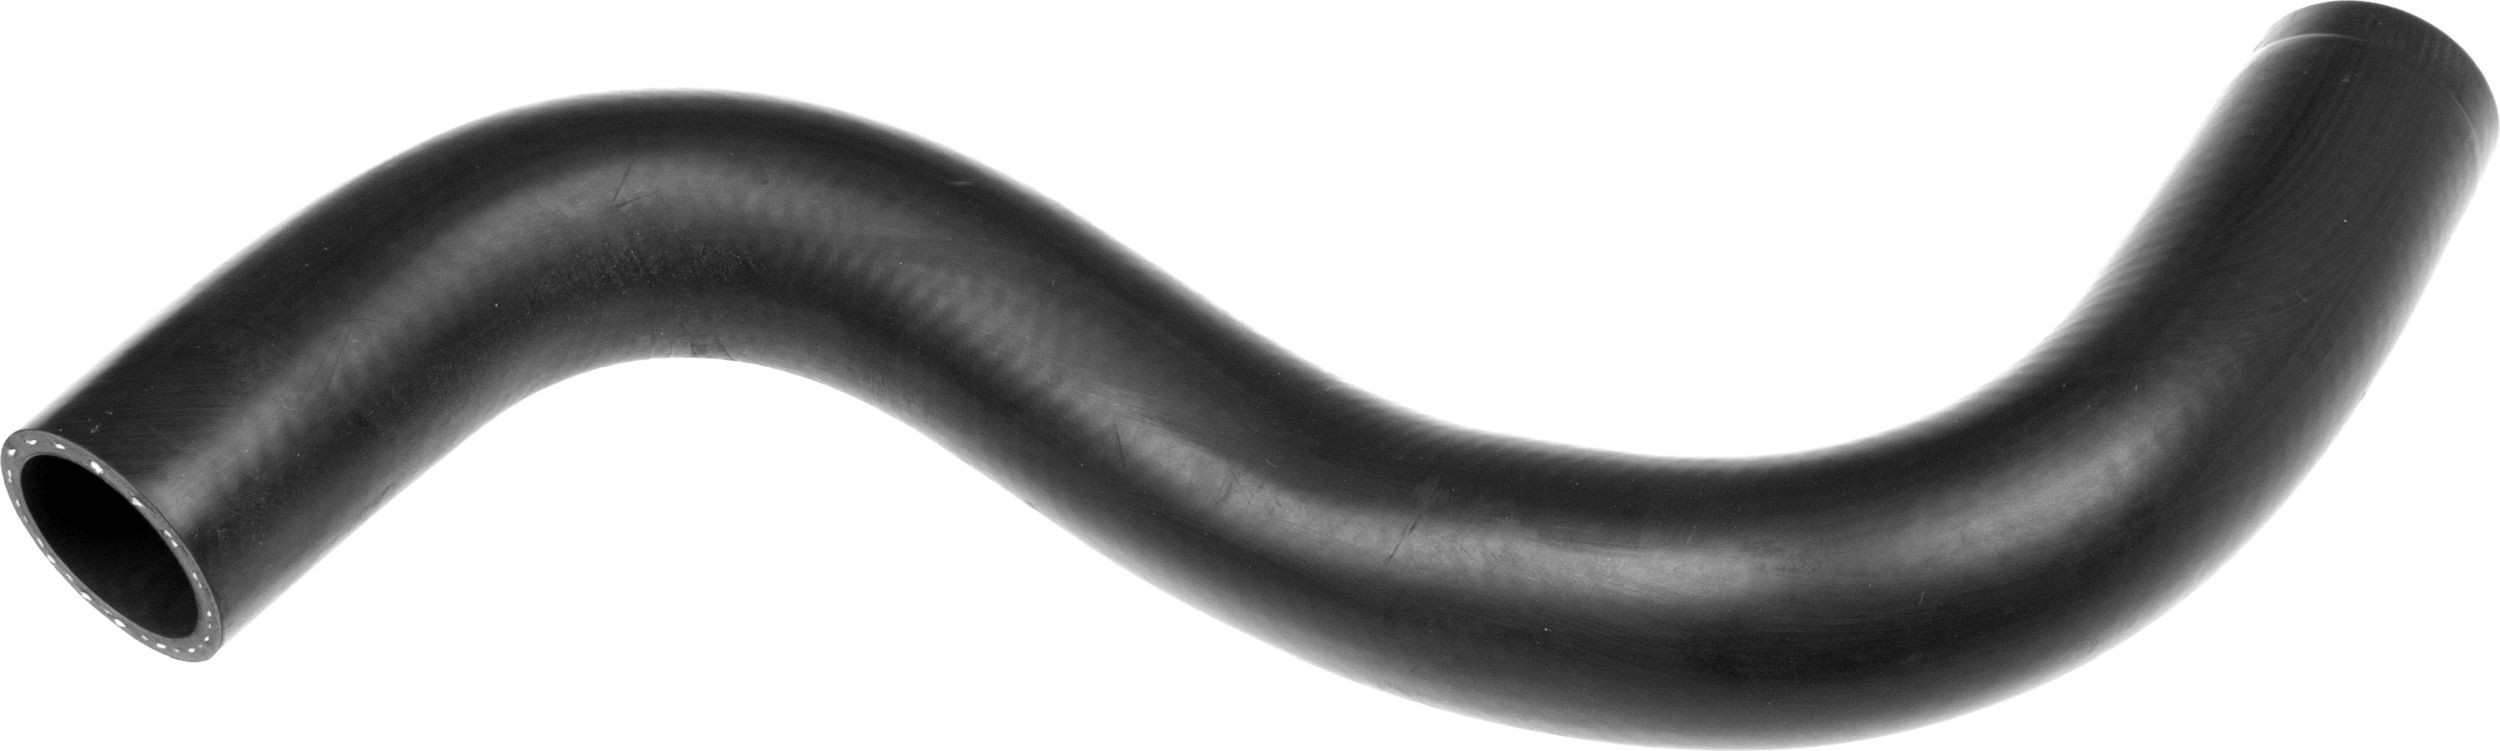 05-1447 GATES Coolant hose TOYOTA EPDM (ethylene propylene diene Monomer (M-class) rubber)